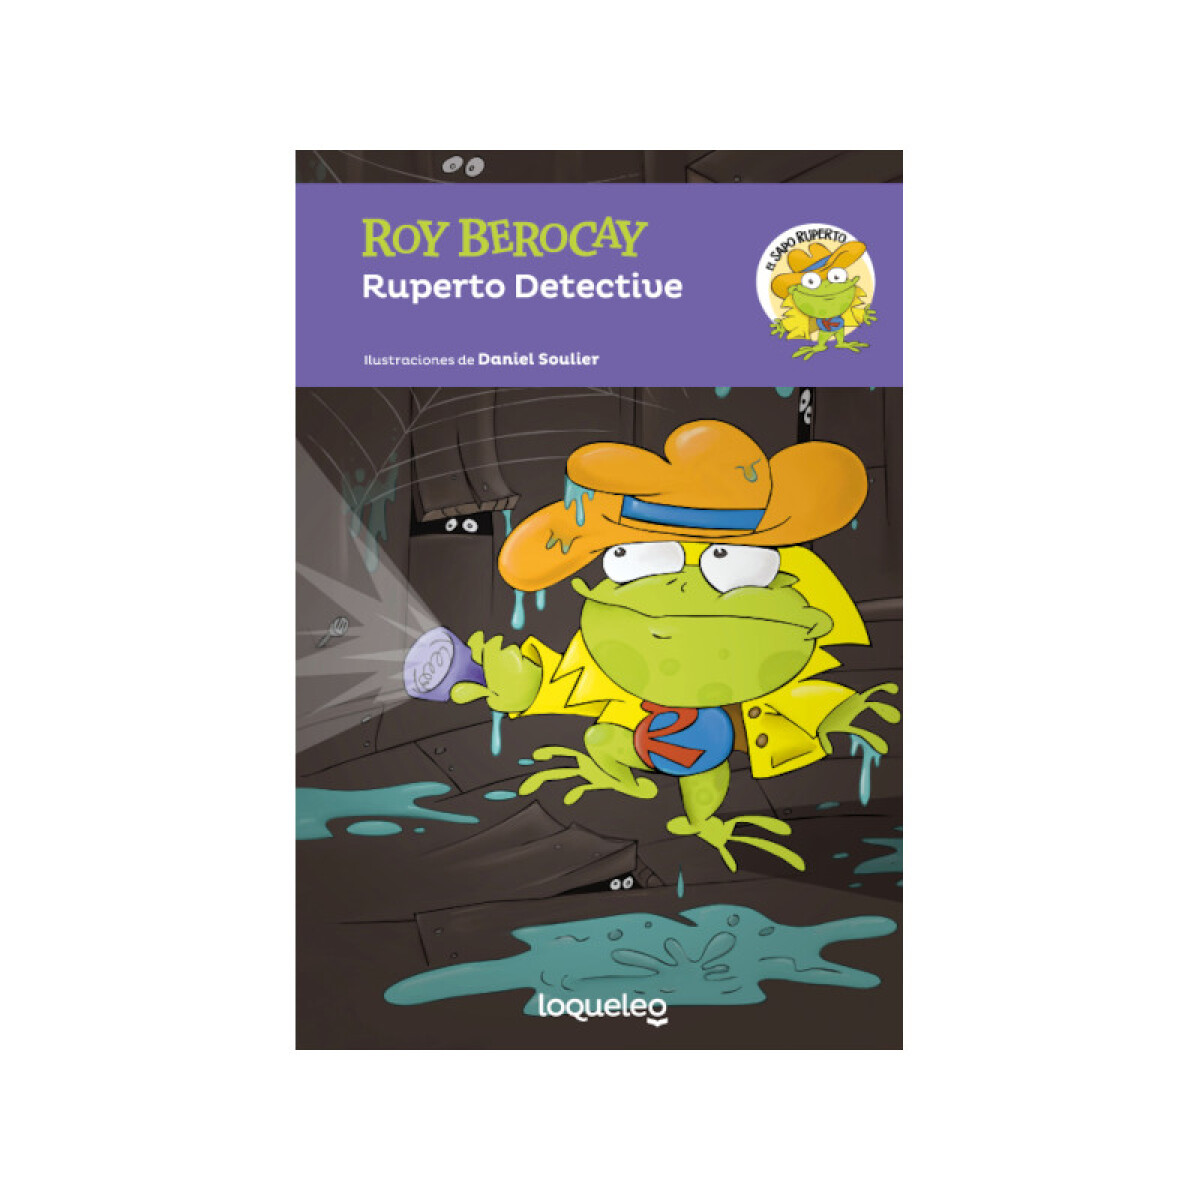 Ruperto detective - Roy Berocay 